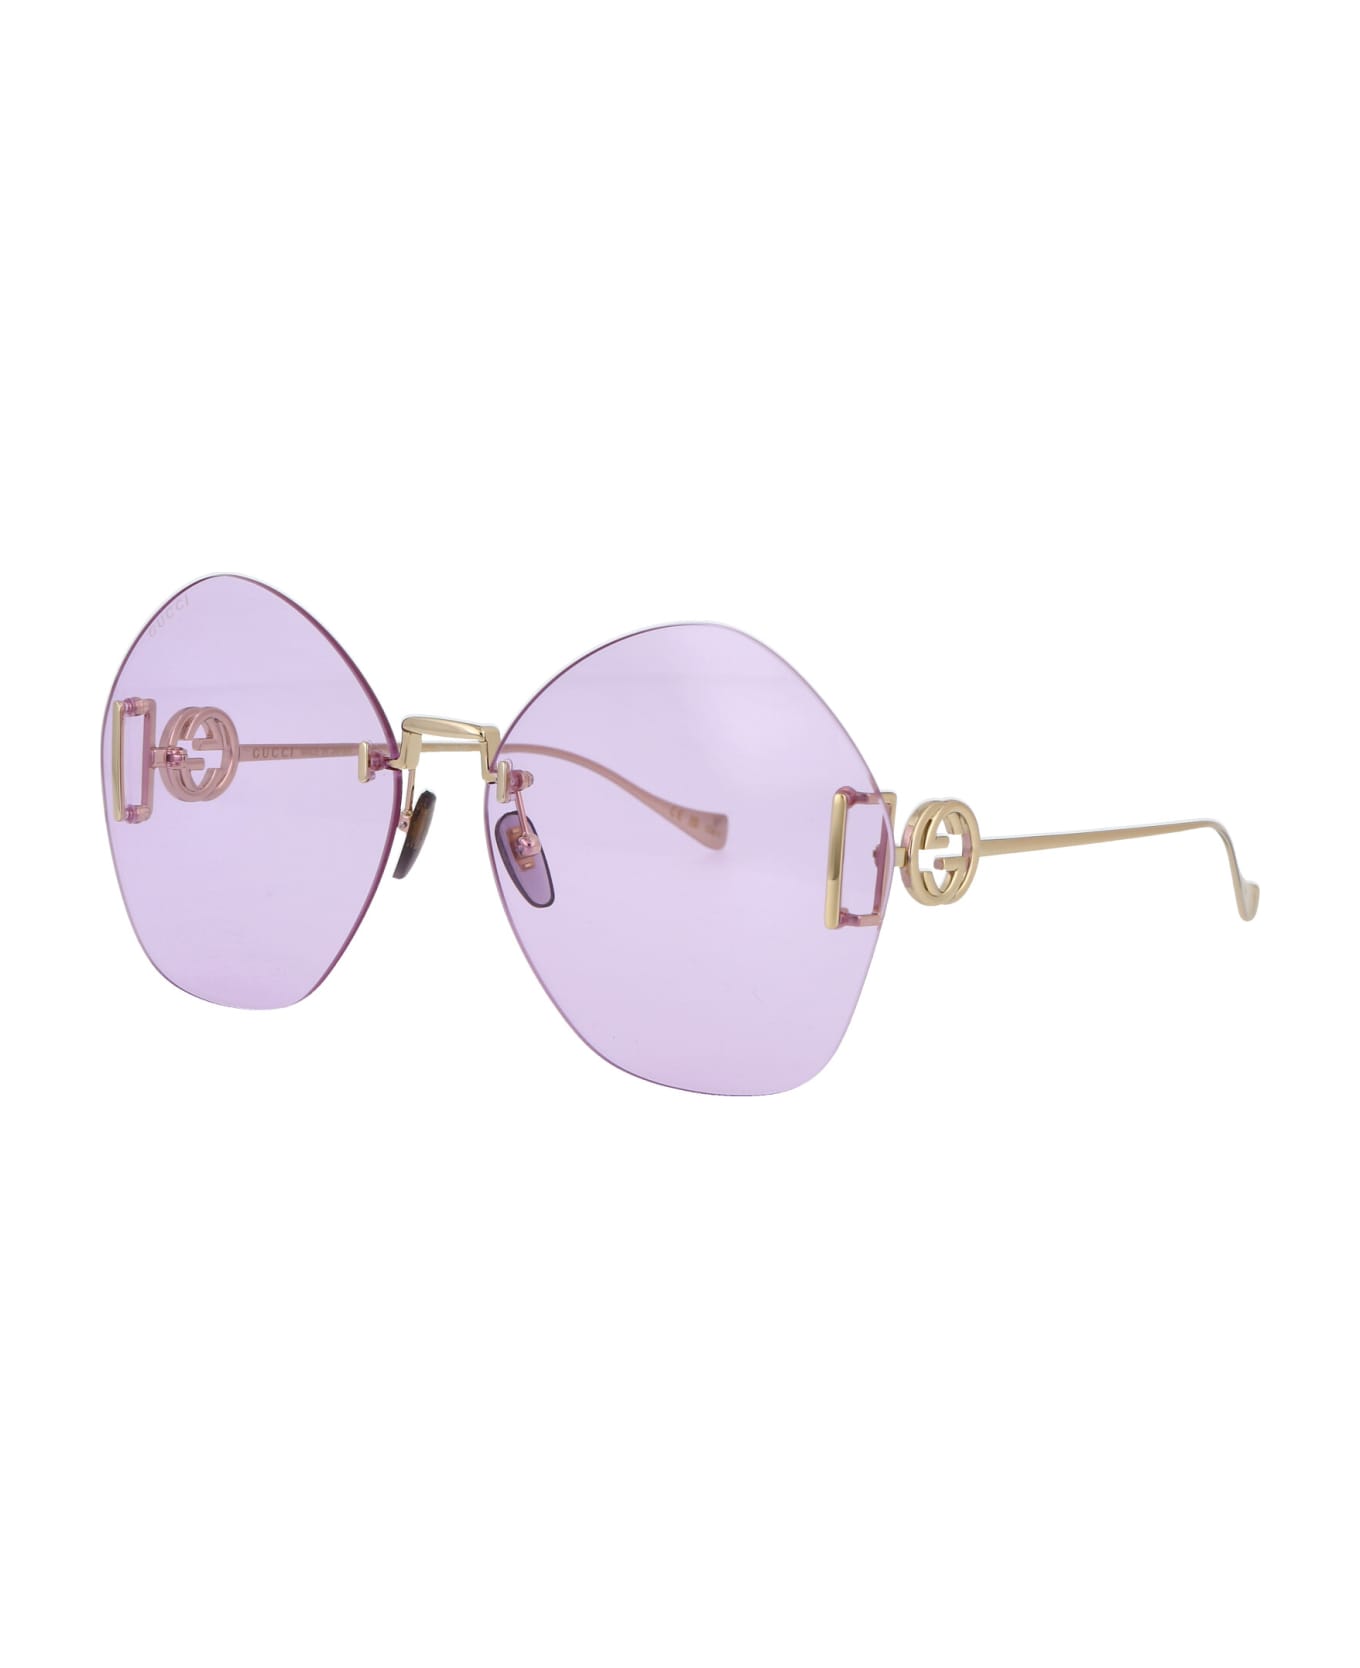 Gucci Eyewear Gg1203s Sunglasses - 001 GOLD GOLD VIOLET